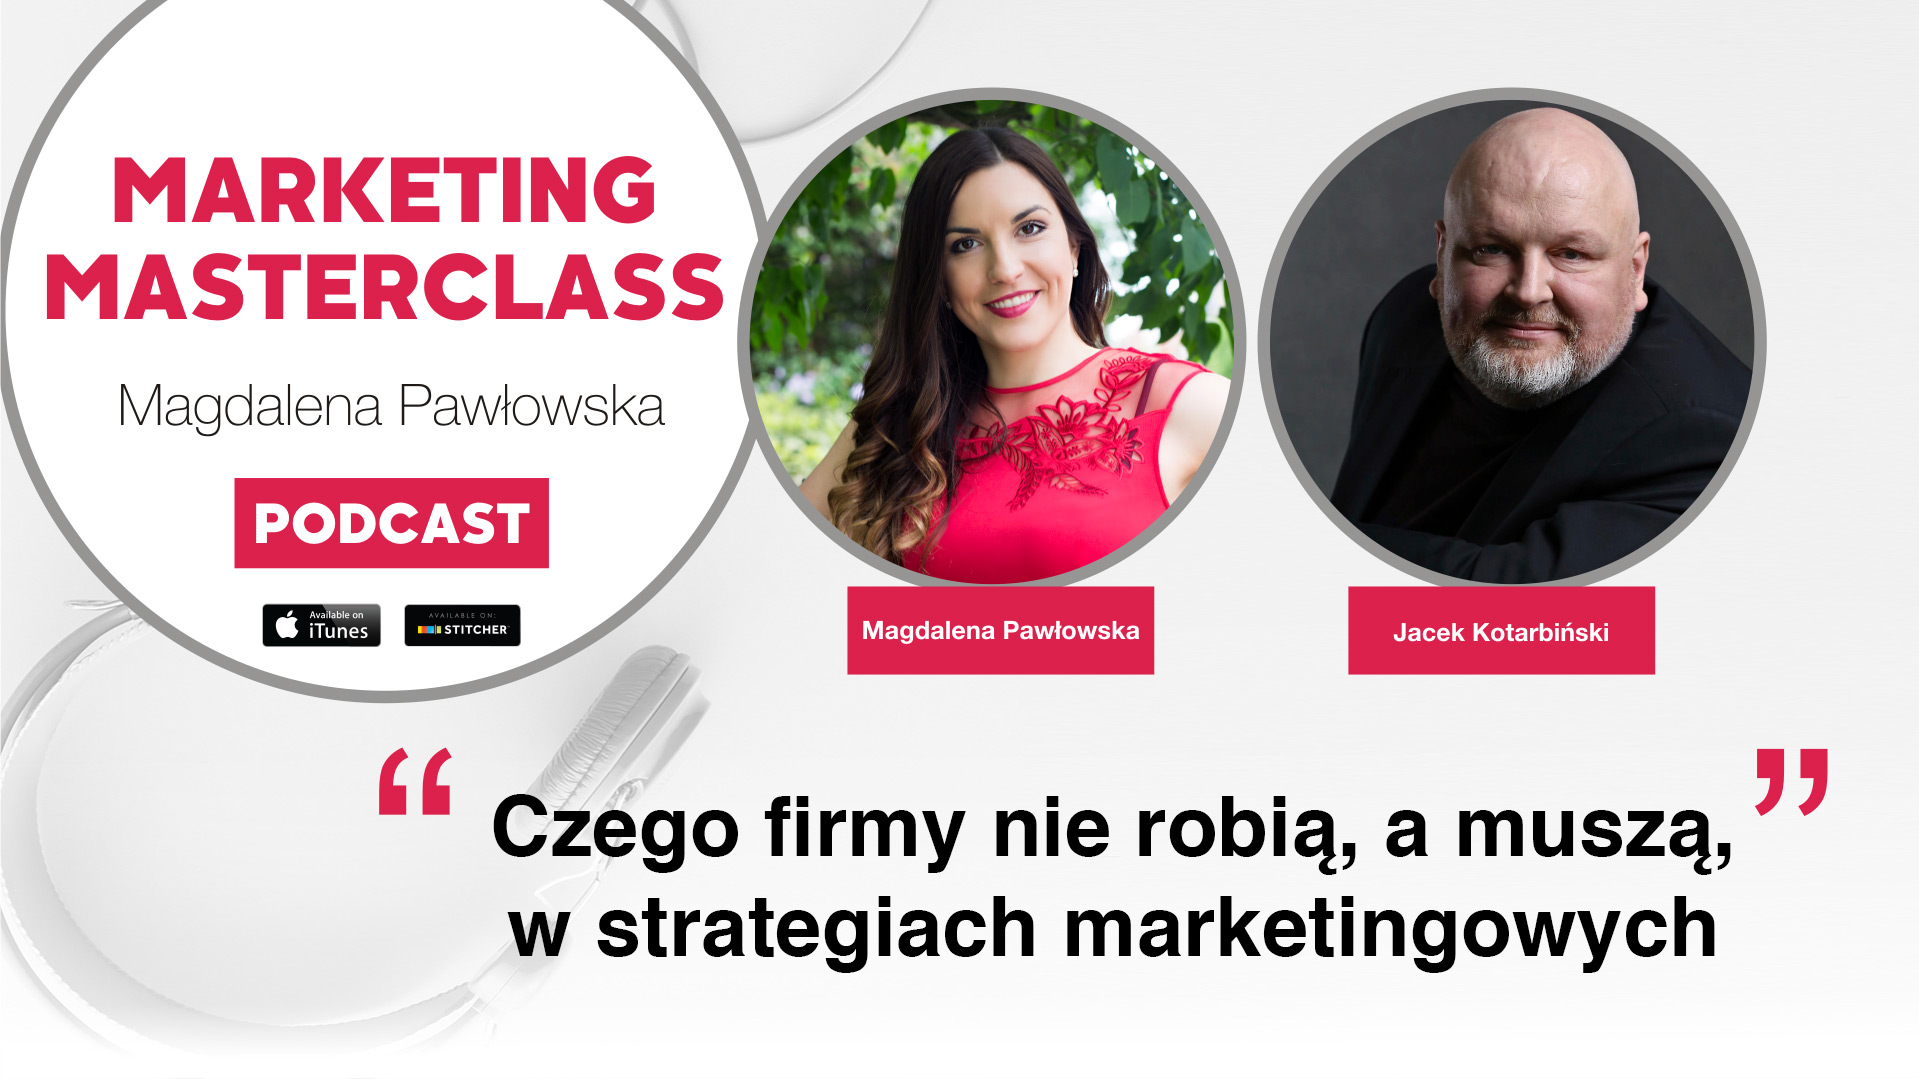 Jacek Kotarbiński - Strategie marketingowe